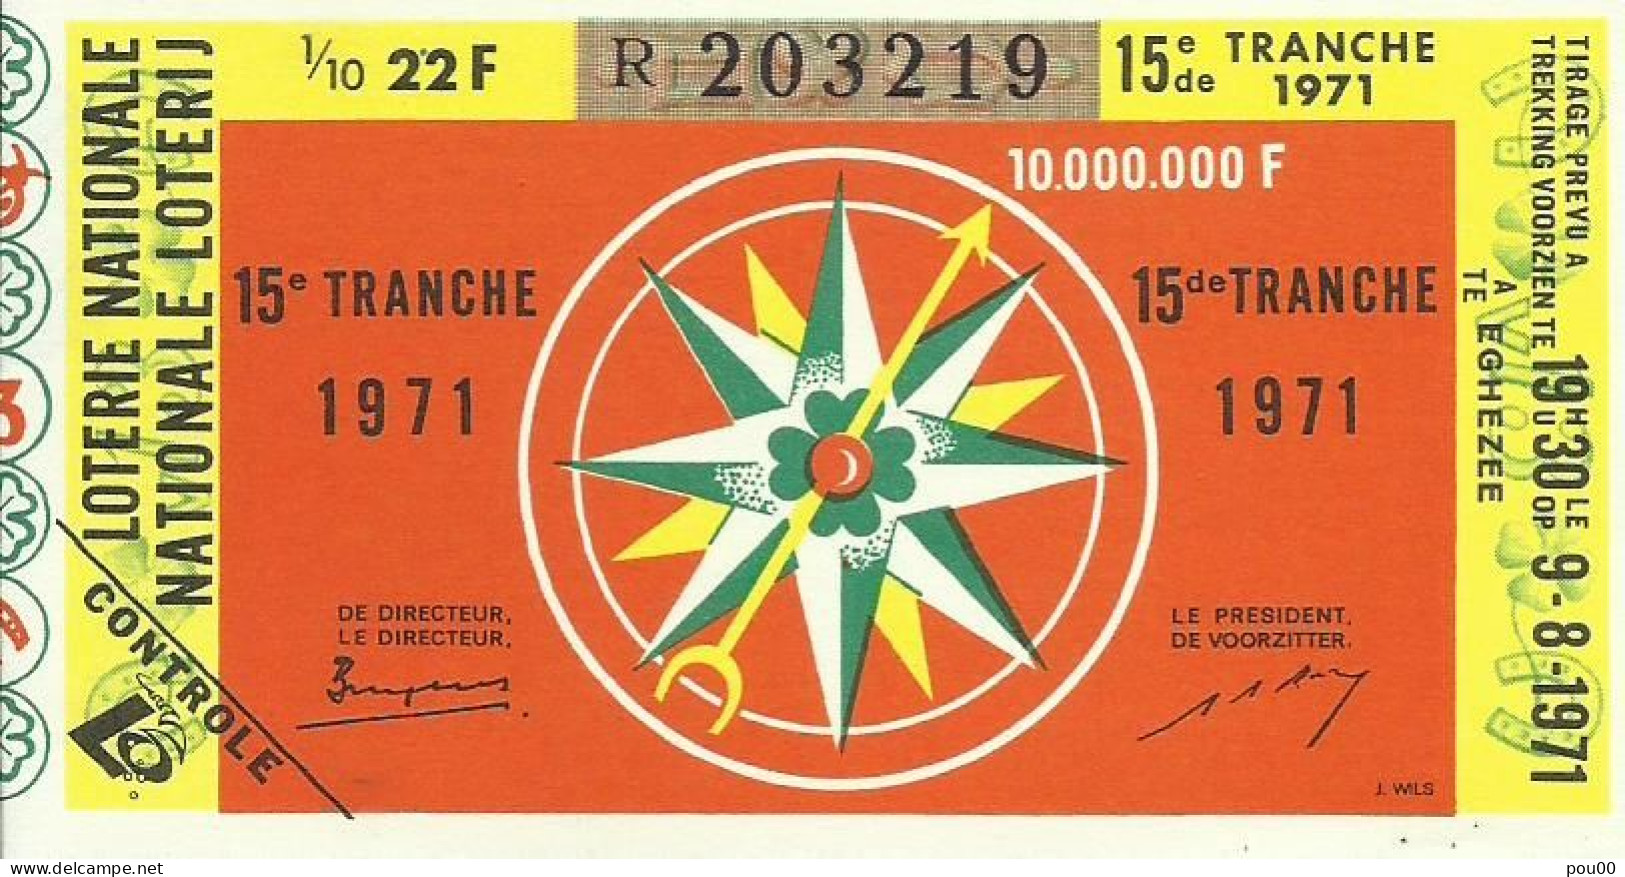 BELGIQUE BILLET DE LOTERIE - Billets De Loterie